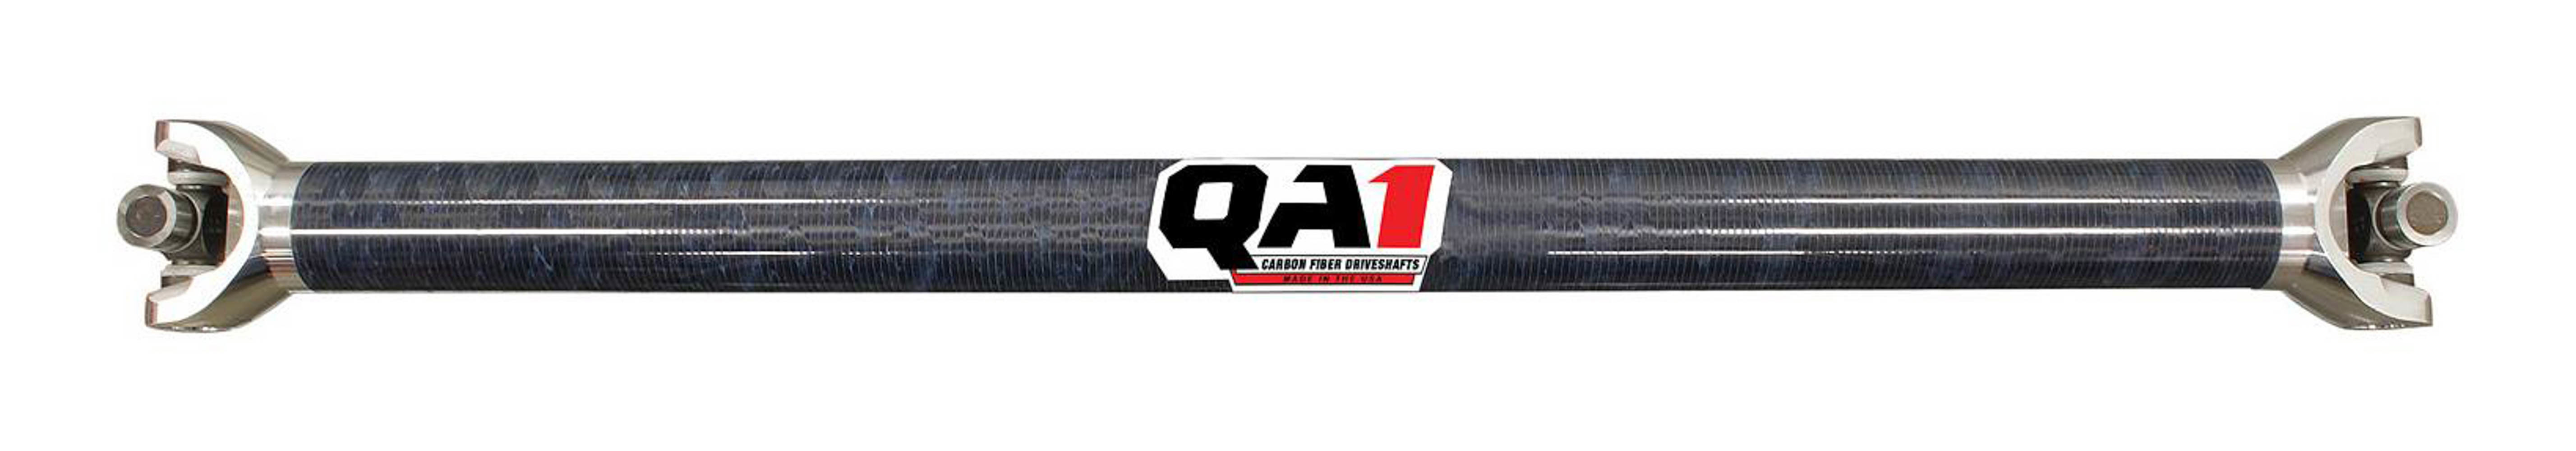 QA1 JJ-11270 Drive Shaft, Dirt Late Model Traction Twist, 35 in Long, 2.25 in OD, 1310 U-Joints, Carbon Fiber, Universal, Each